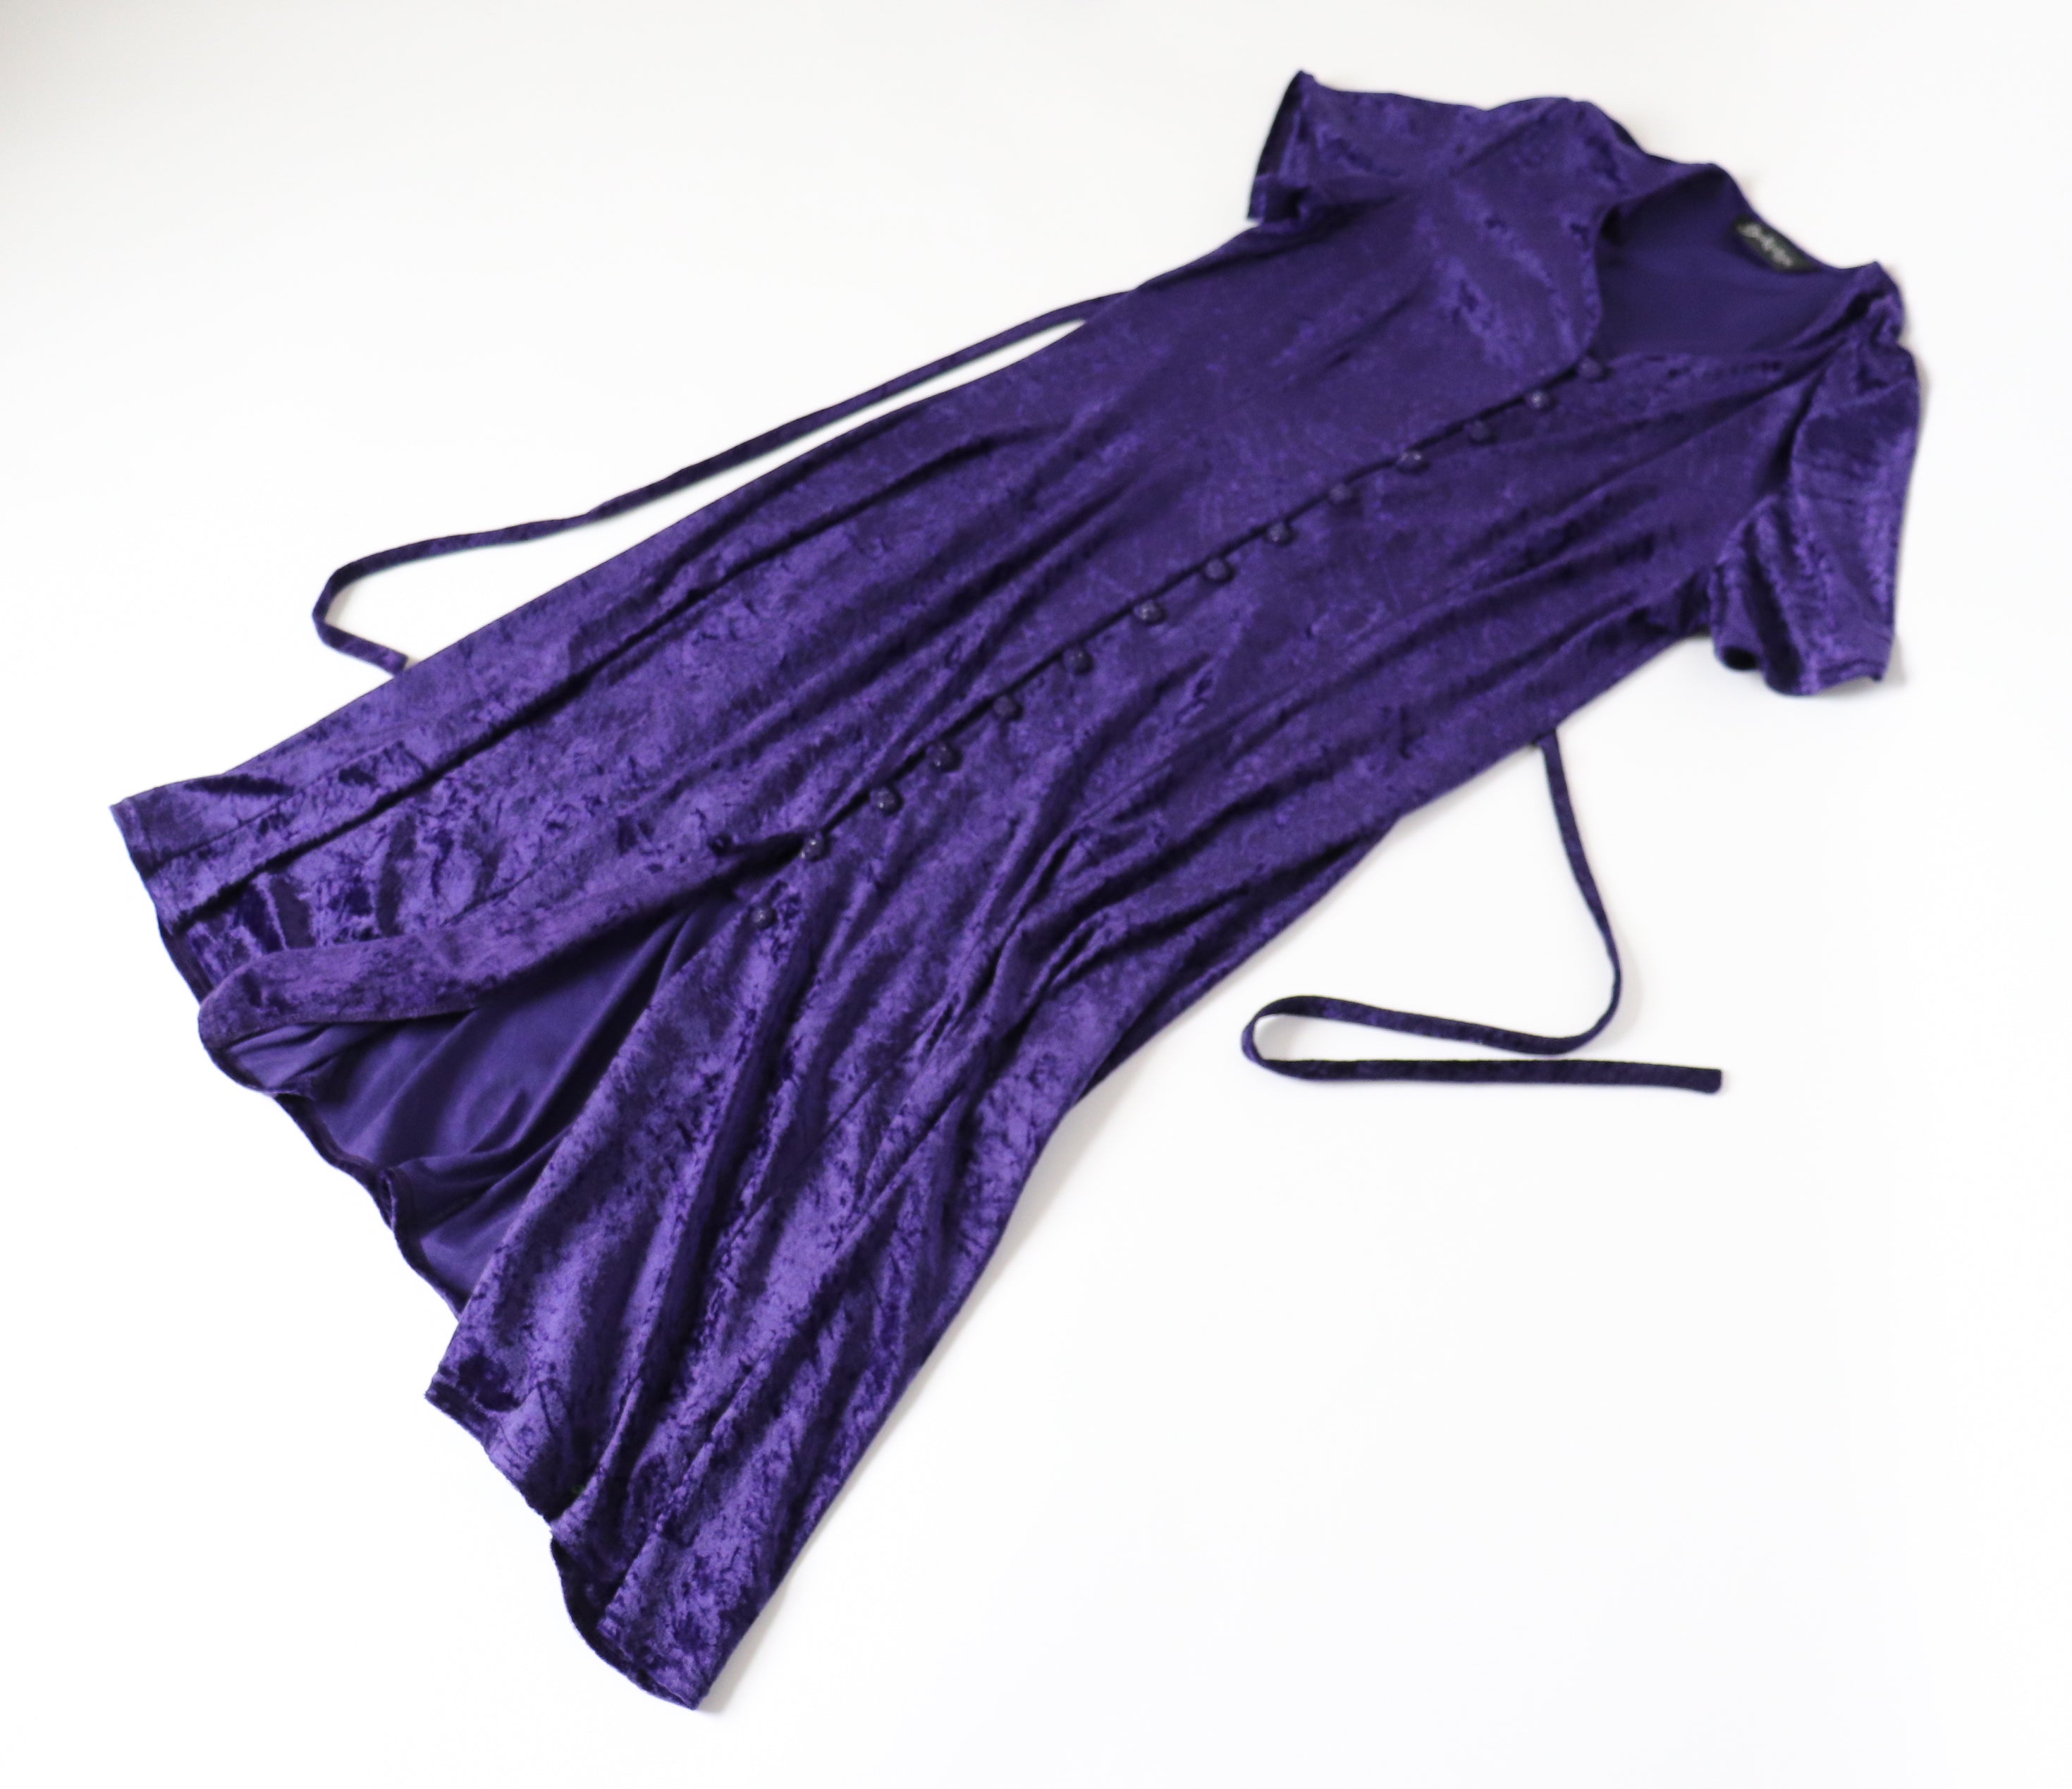 Crushed Velvet Berketex Dress - Purple - Label UK 22 - Fit XXL / UK 18